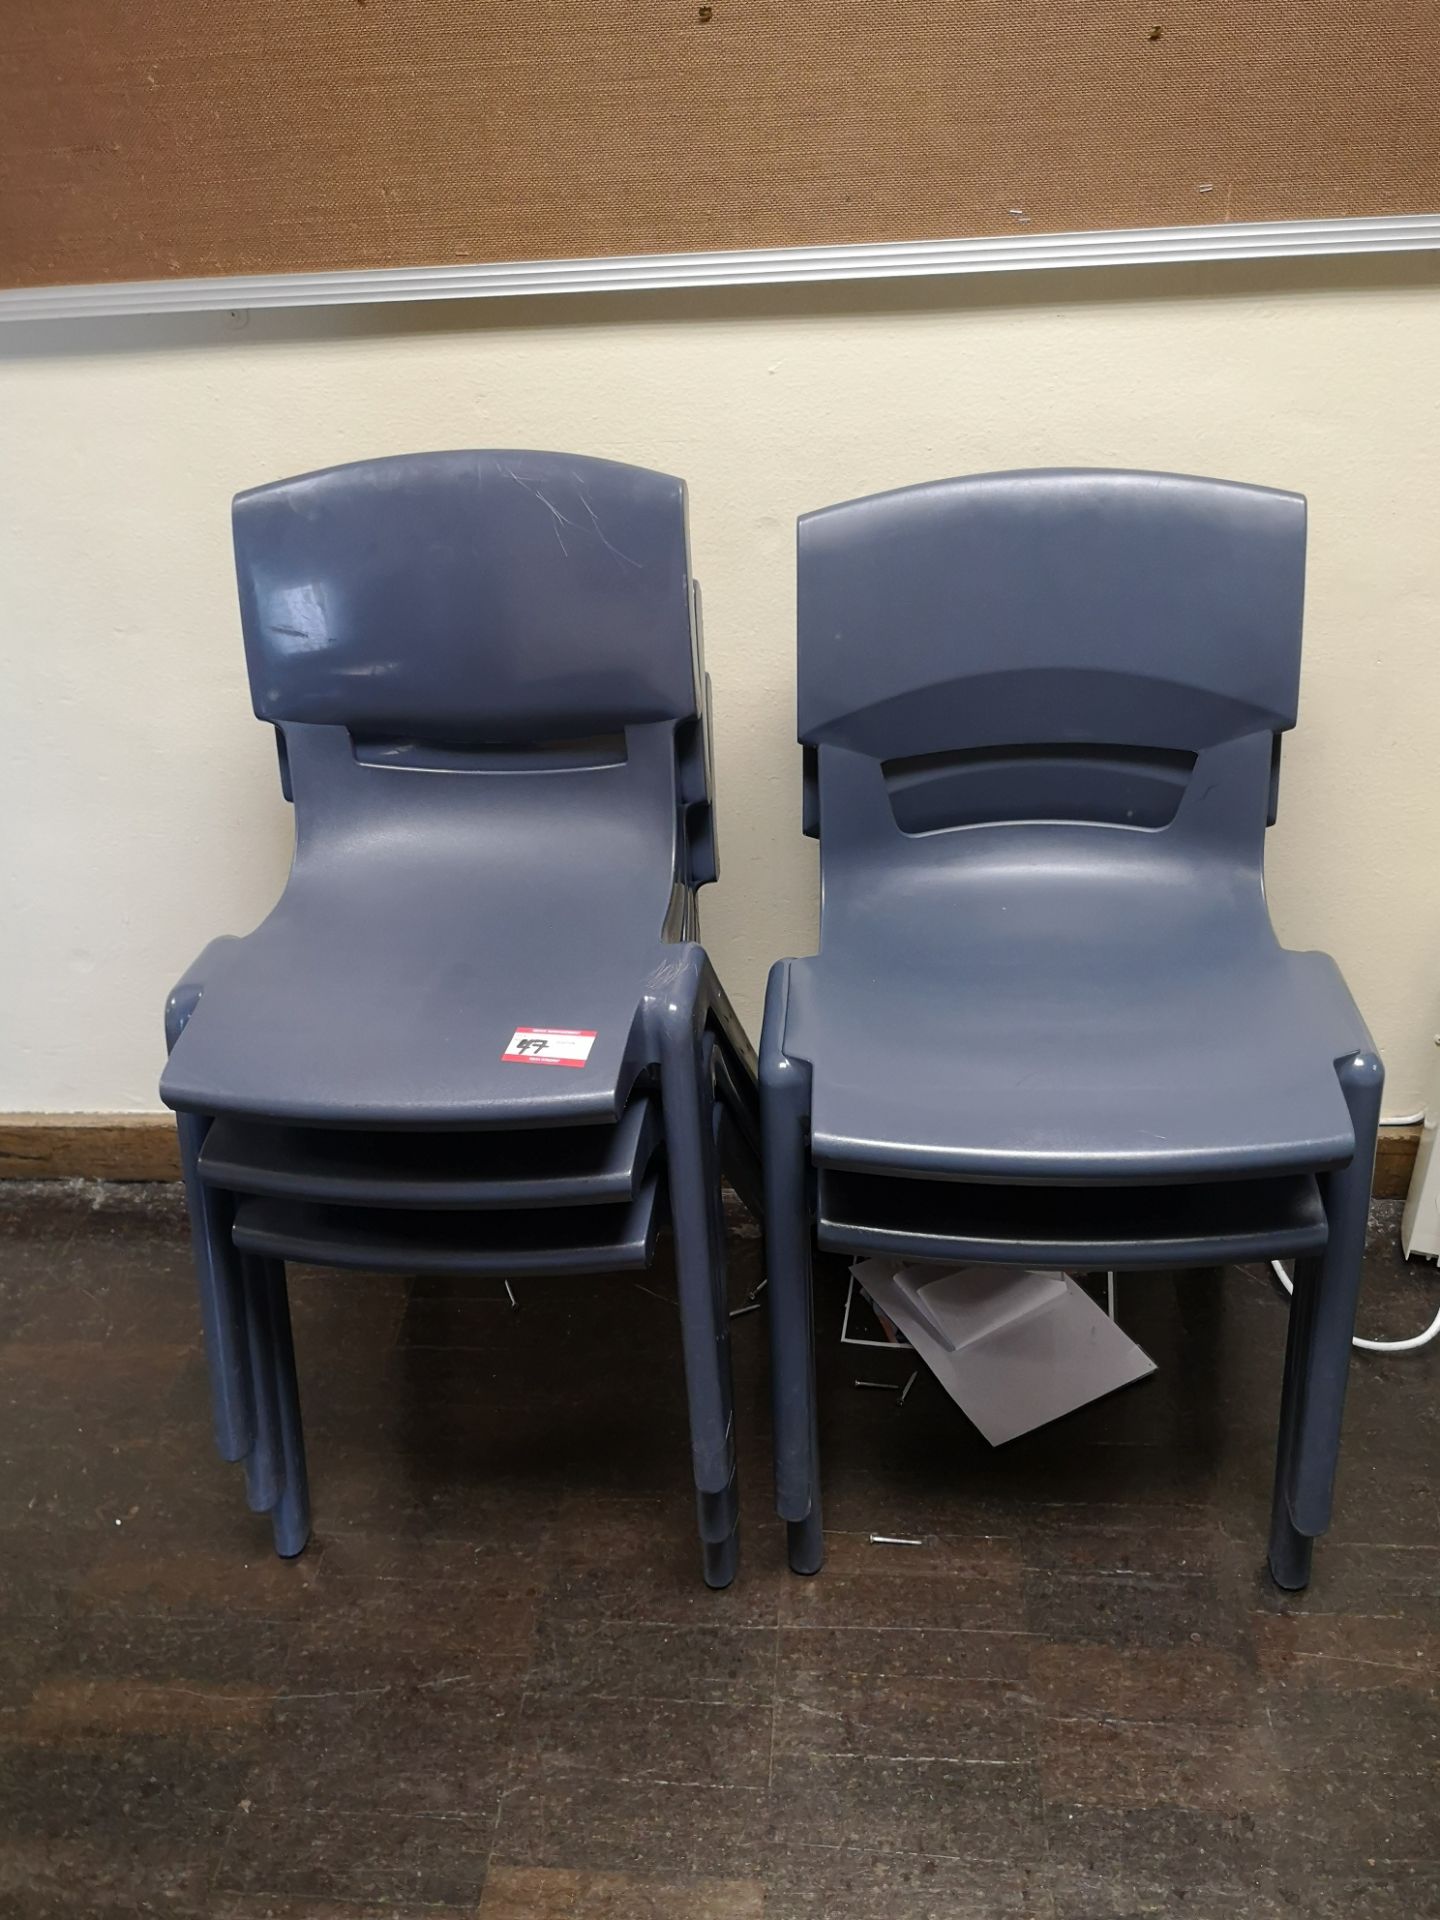 5x postura school chairs